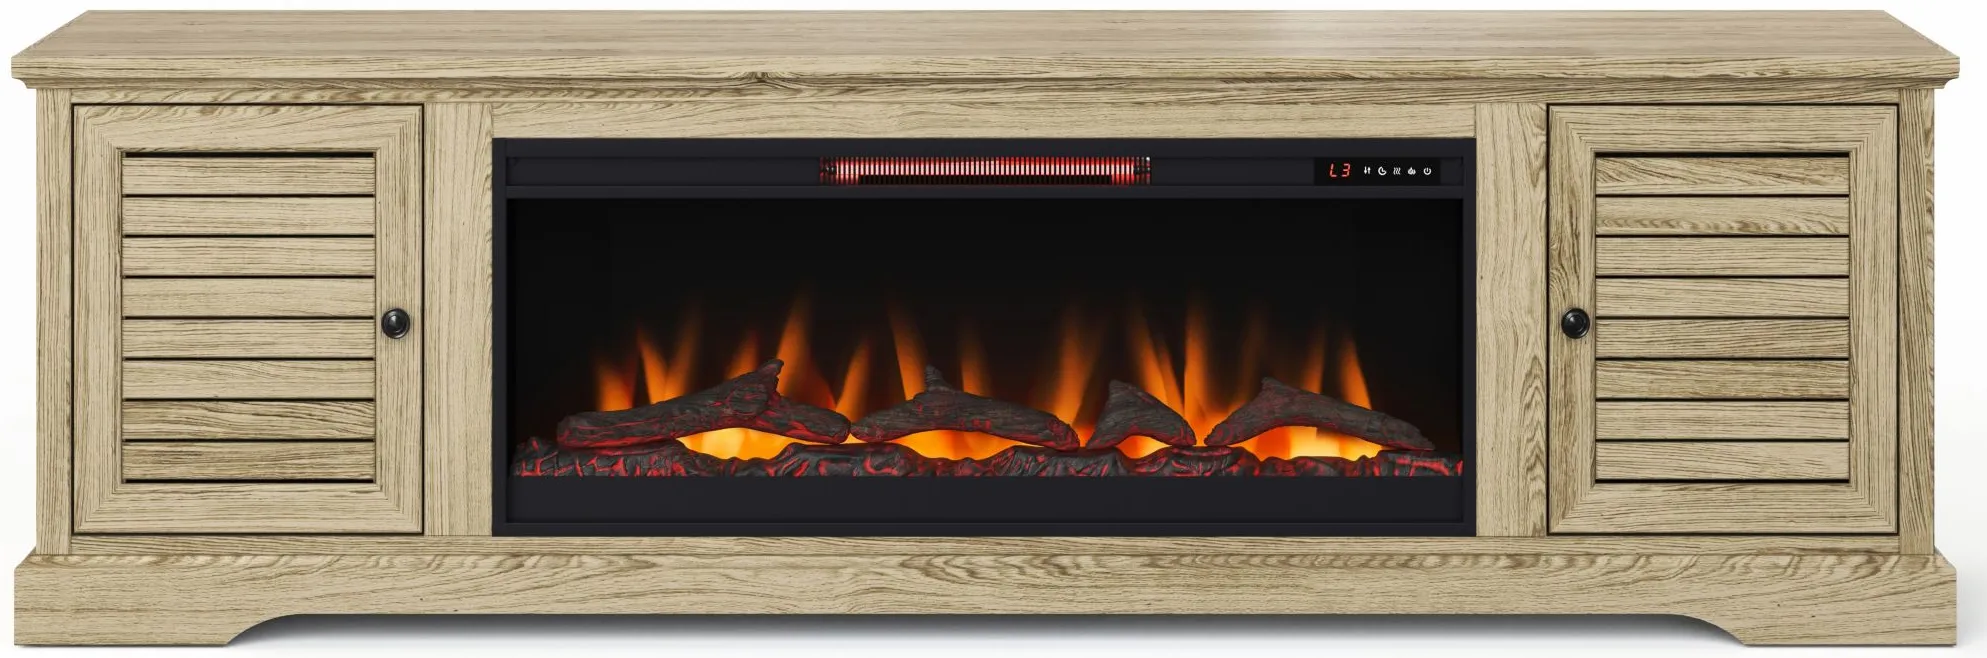 Topanga Super Fireplace Console in Alabaster by Legends Furniture